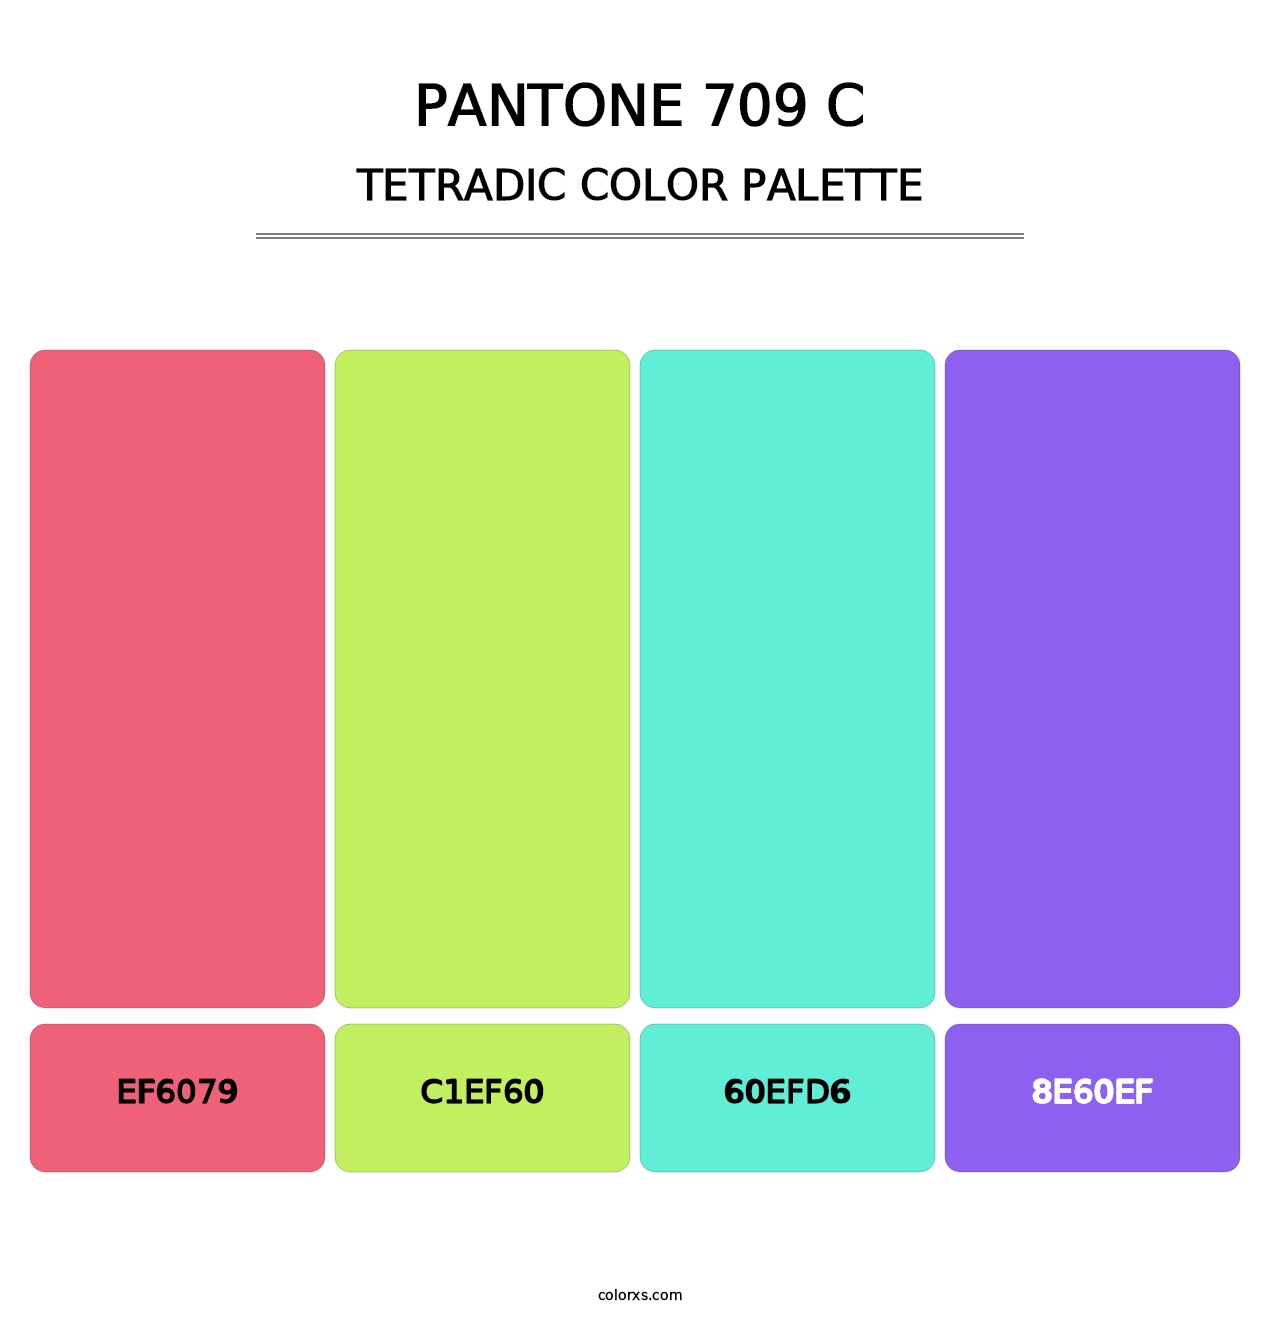 PANTONE 709 C - Tetradic Color Palette